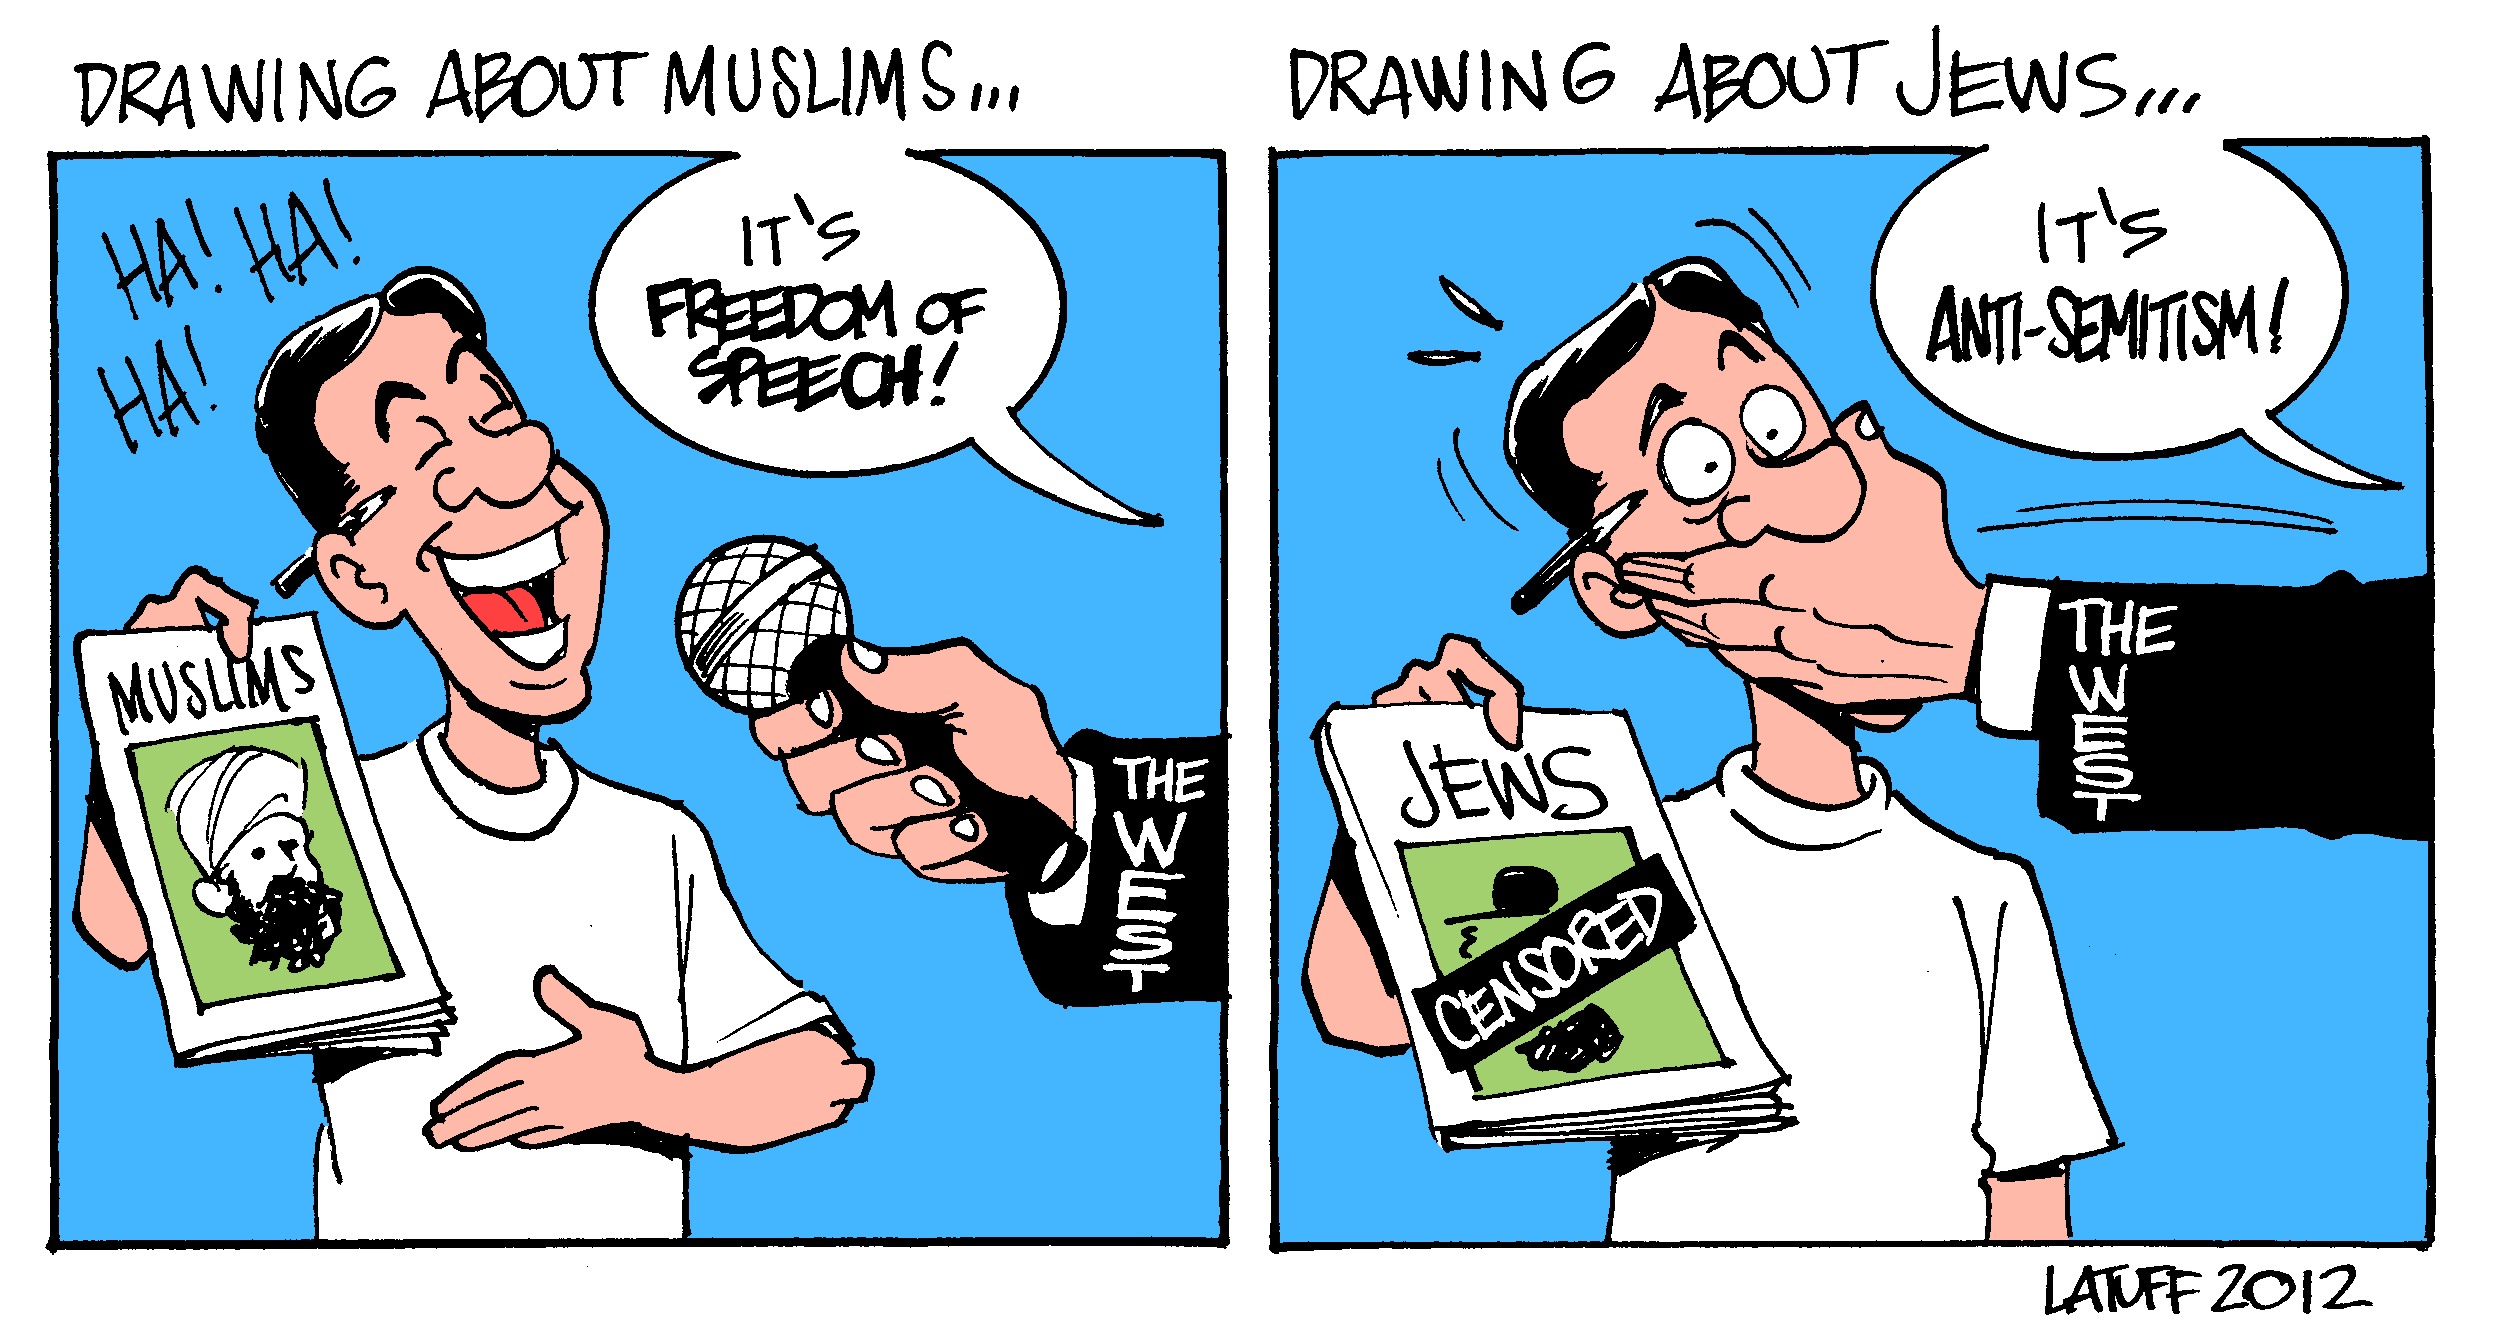 west-double-standard-on-mocking-jews-muslims